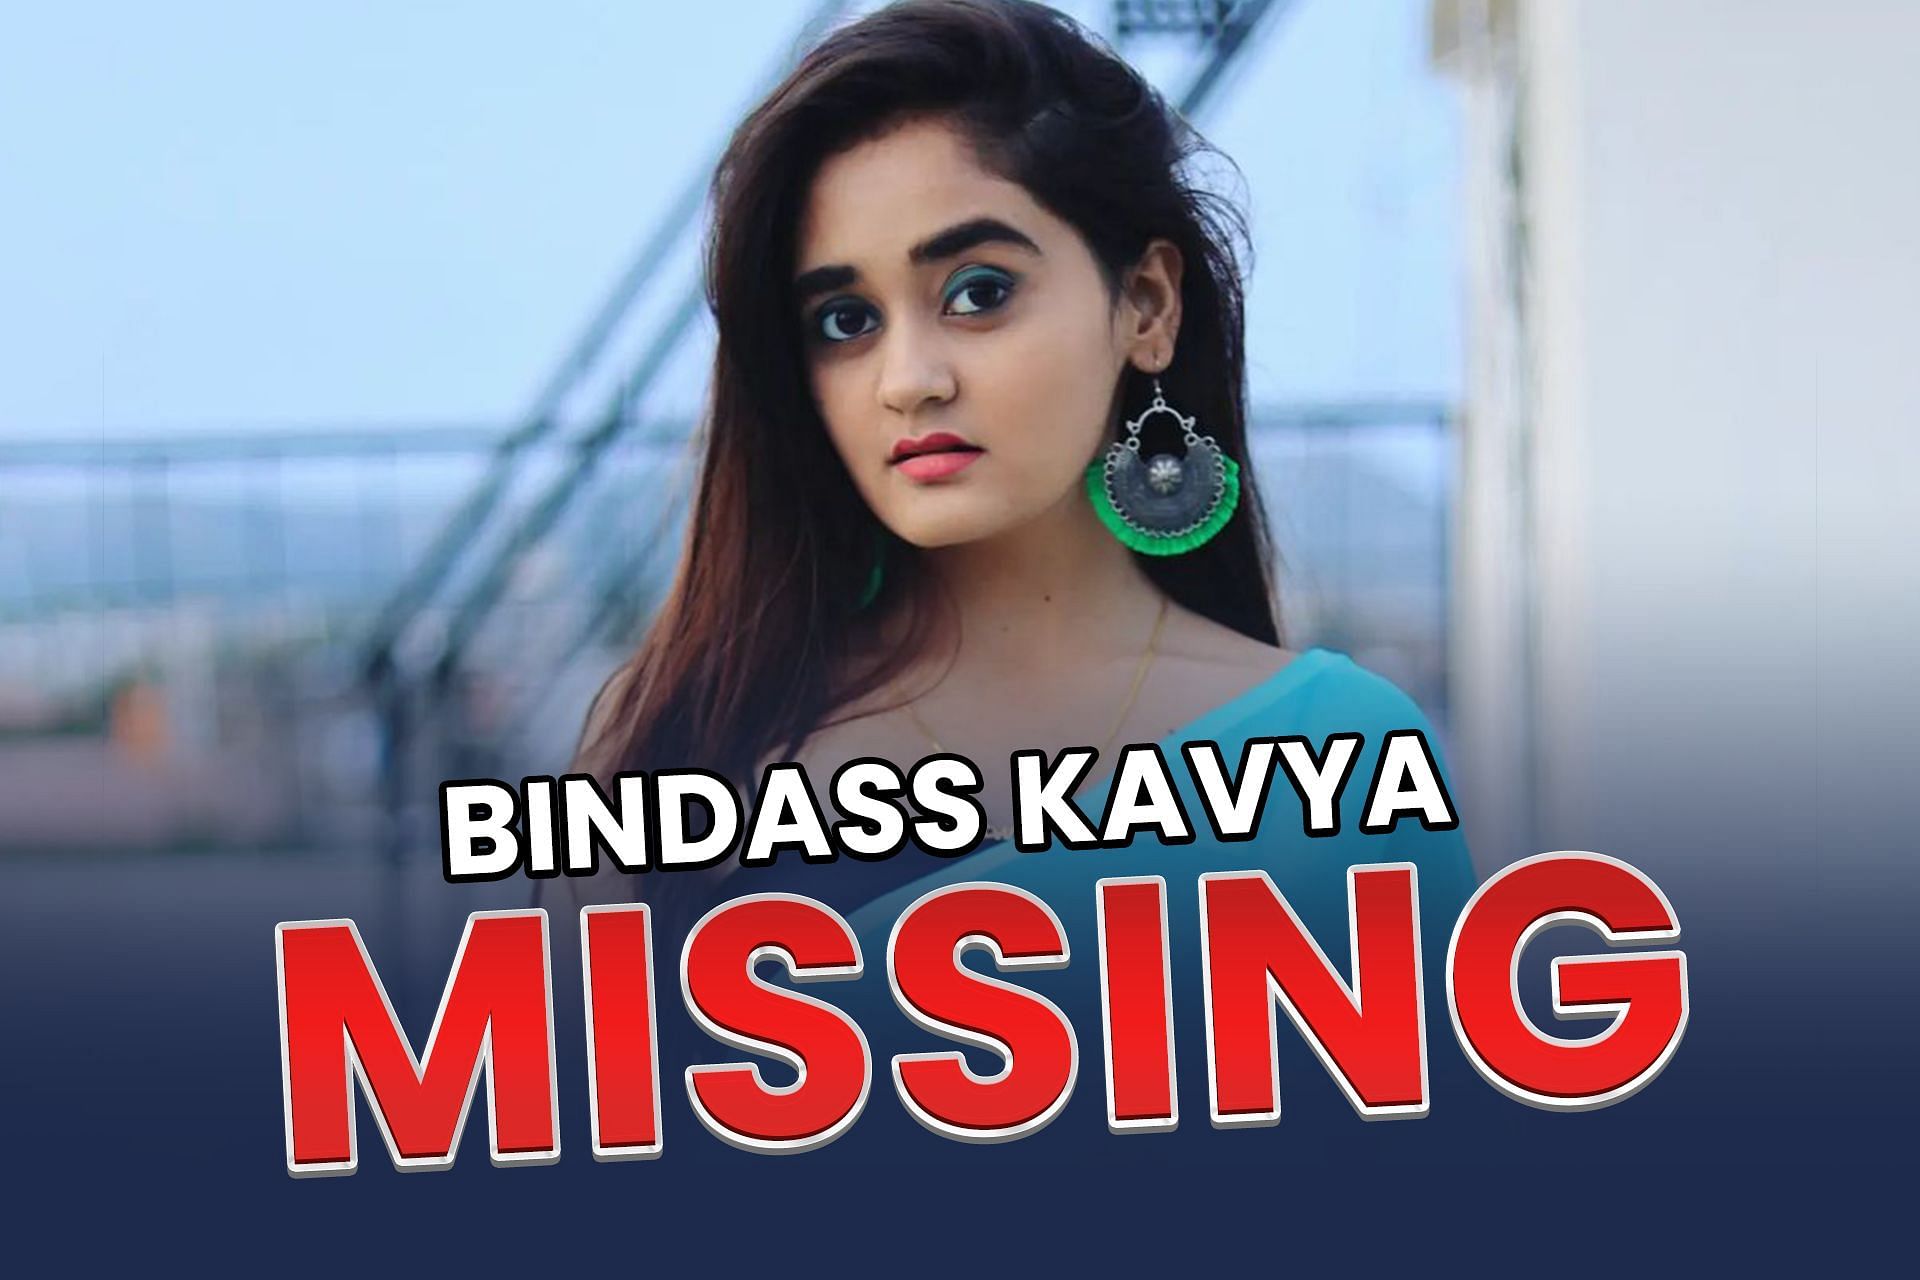 BGMI YouTuber Bindass Kavya was missing since 9 September, 2:00 PM (Image via Sportskeeda)